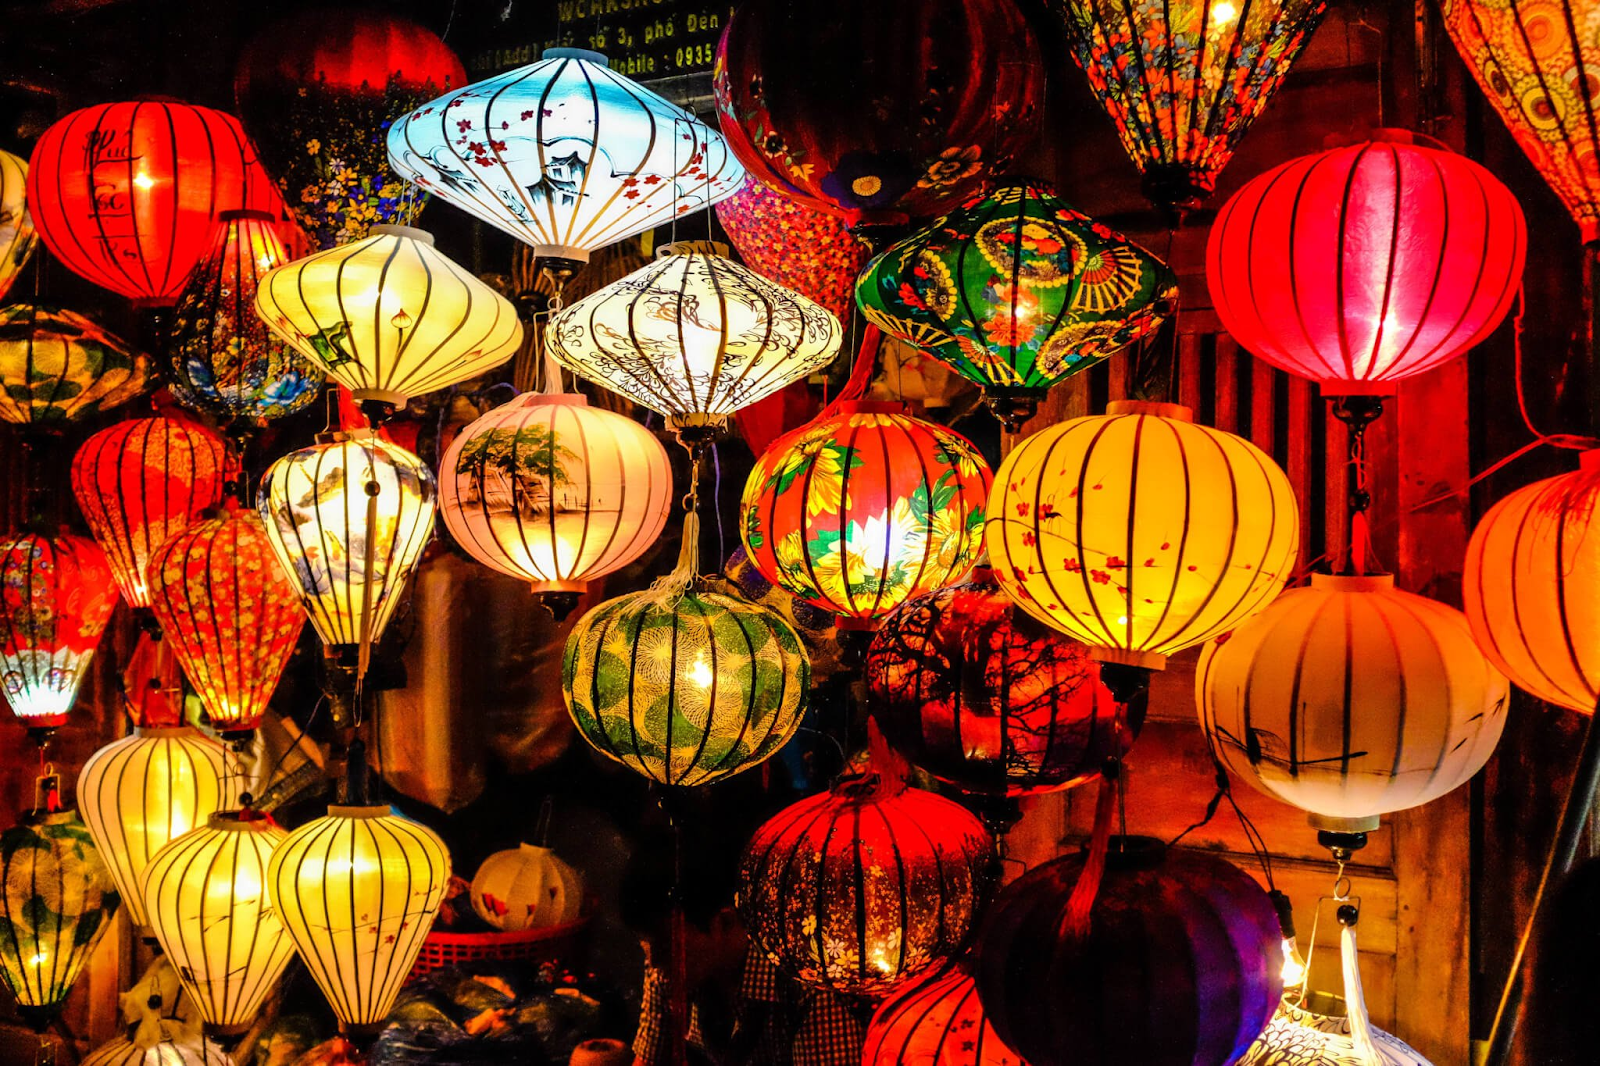 Colorful, unique lanterns which symbolize a new start